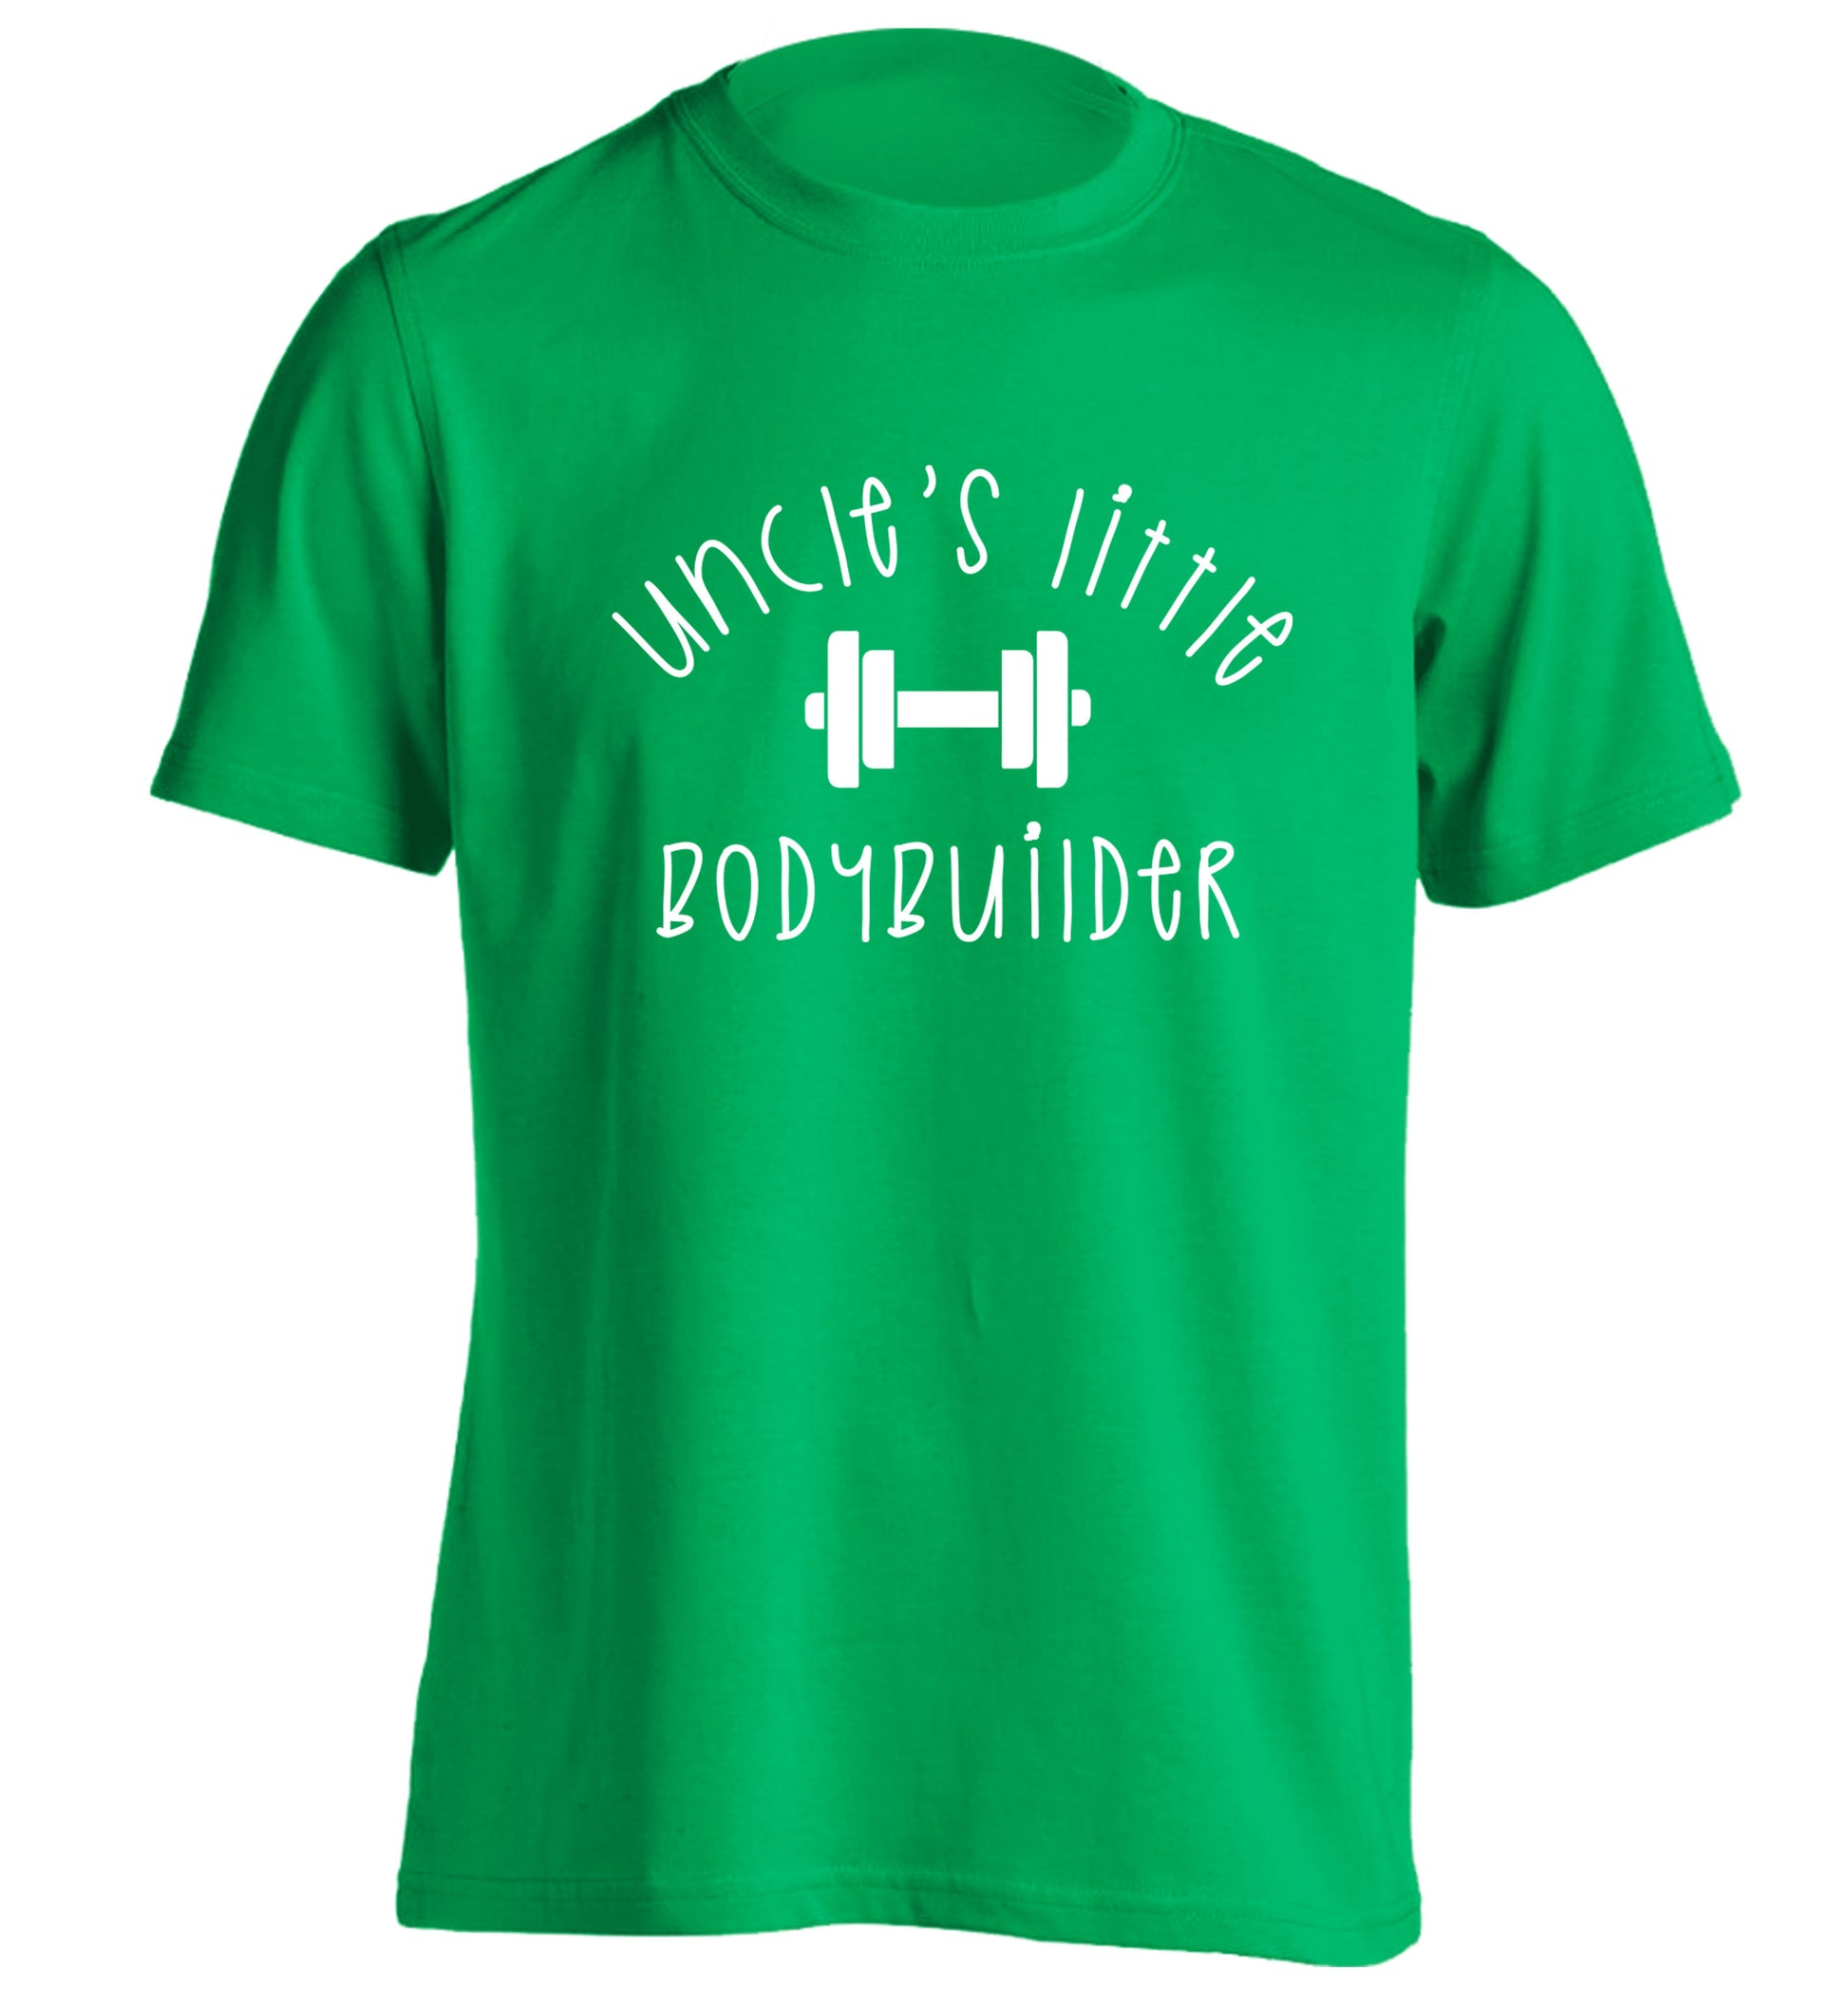 Uncle's little bodybuilder adults unisex green Tshirt 2XL